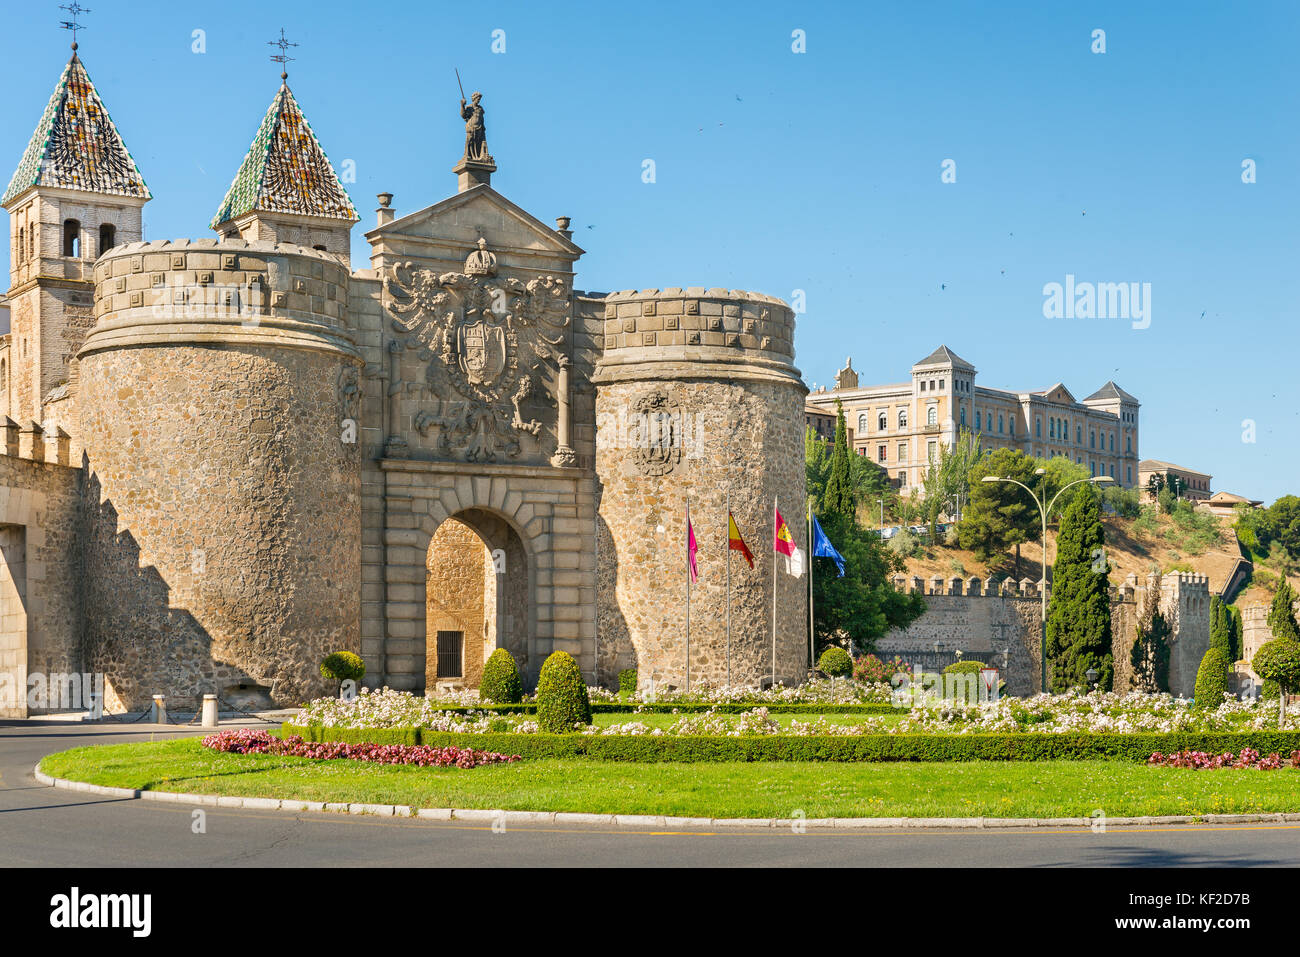 Puerta de Bisagra o alfonso vi porta in città di Toledo, Spagna. Foto Stock